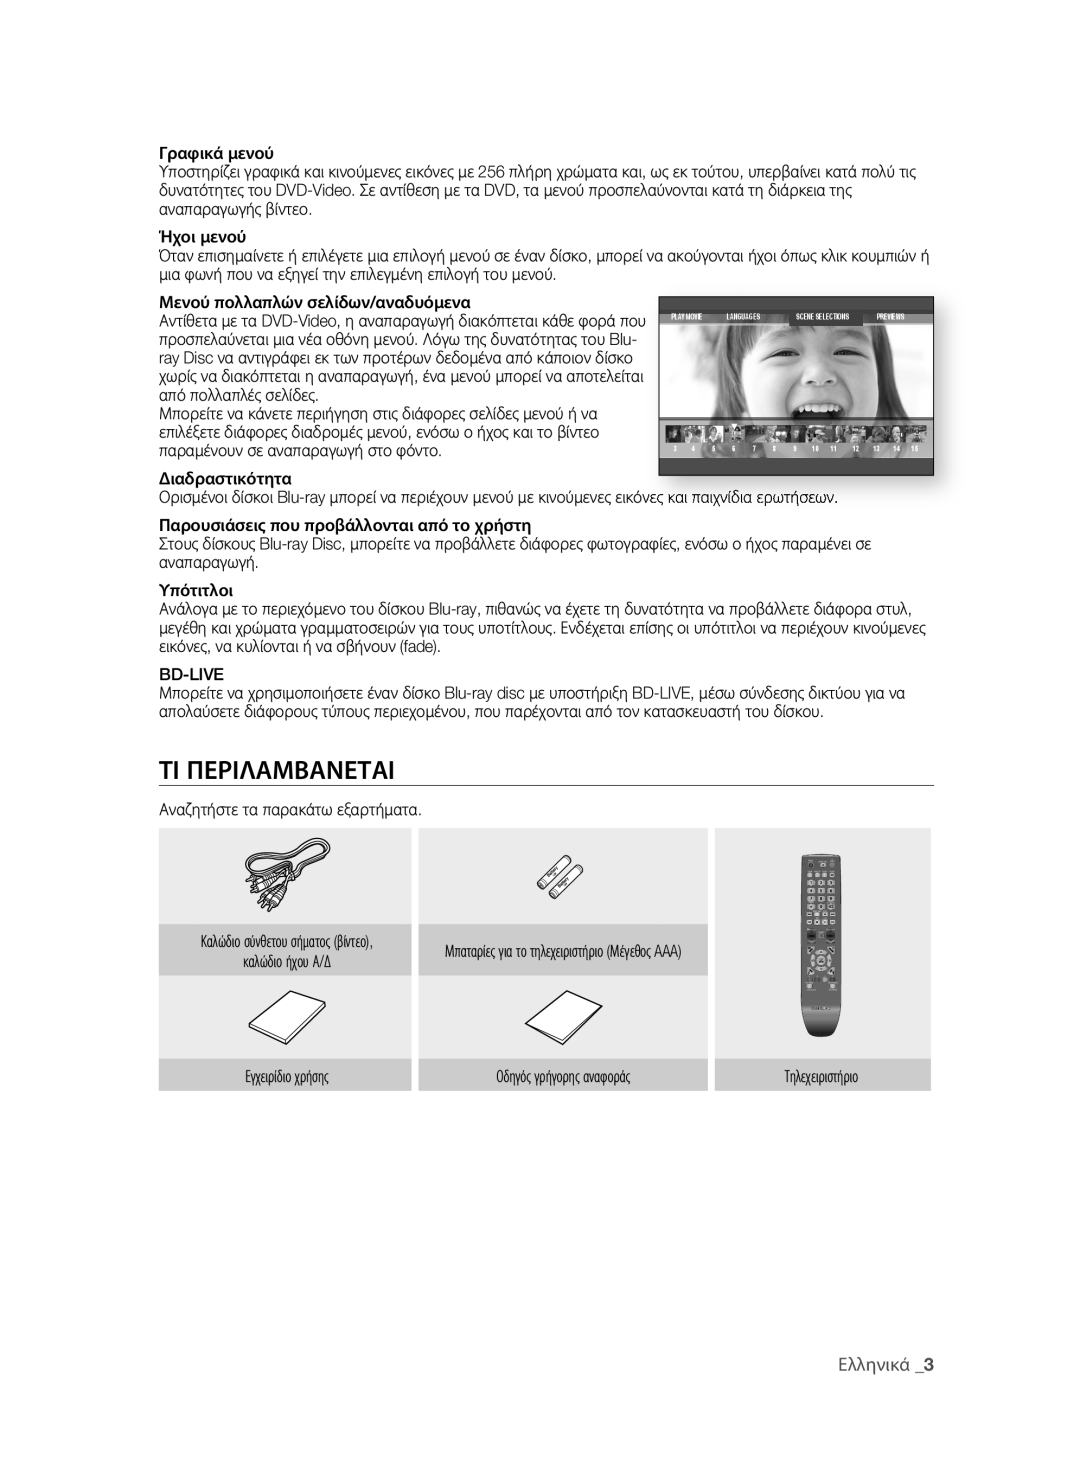 Samsung BD-P1580/EDC manual Τι ΠεριΛΑΜβΑΝεΤΑι, Ελληνικά 